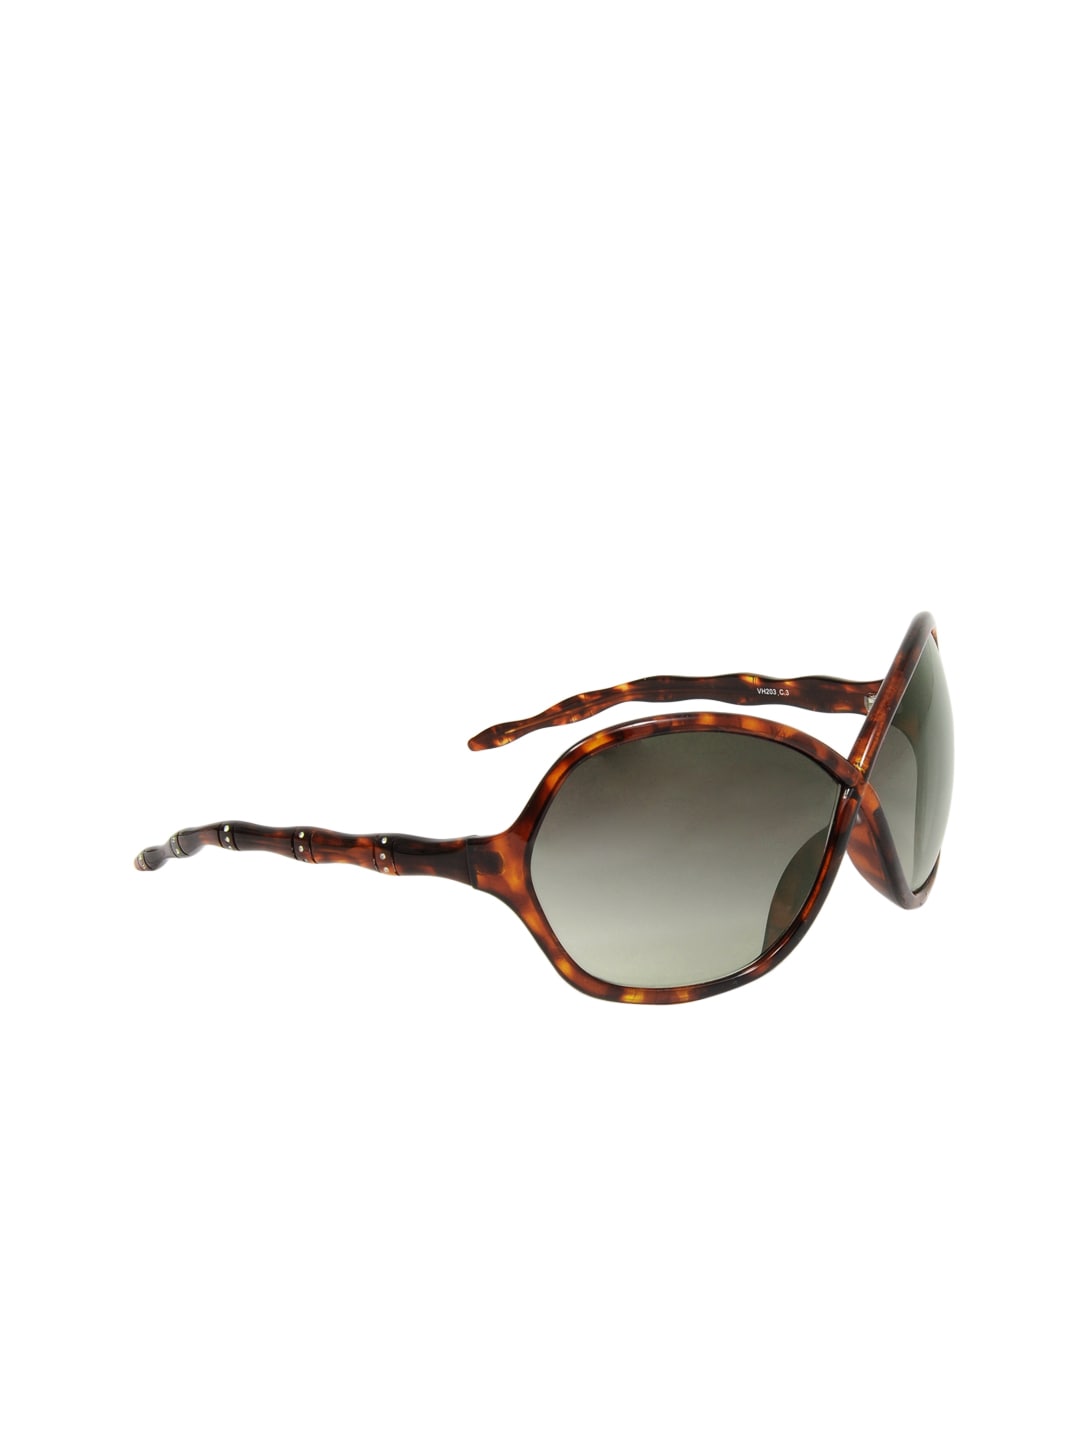 Van Heusen Women Brown Printed Oversized Sunglasses VH203-C3